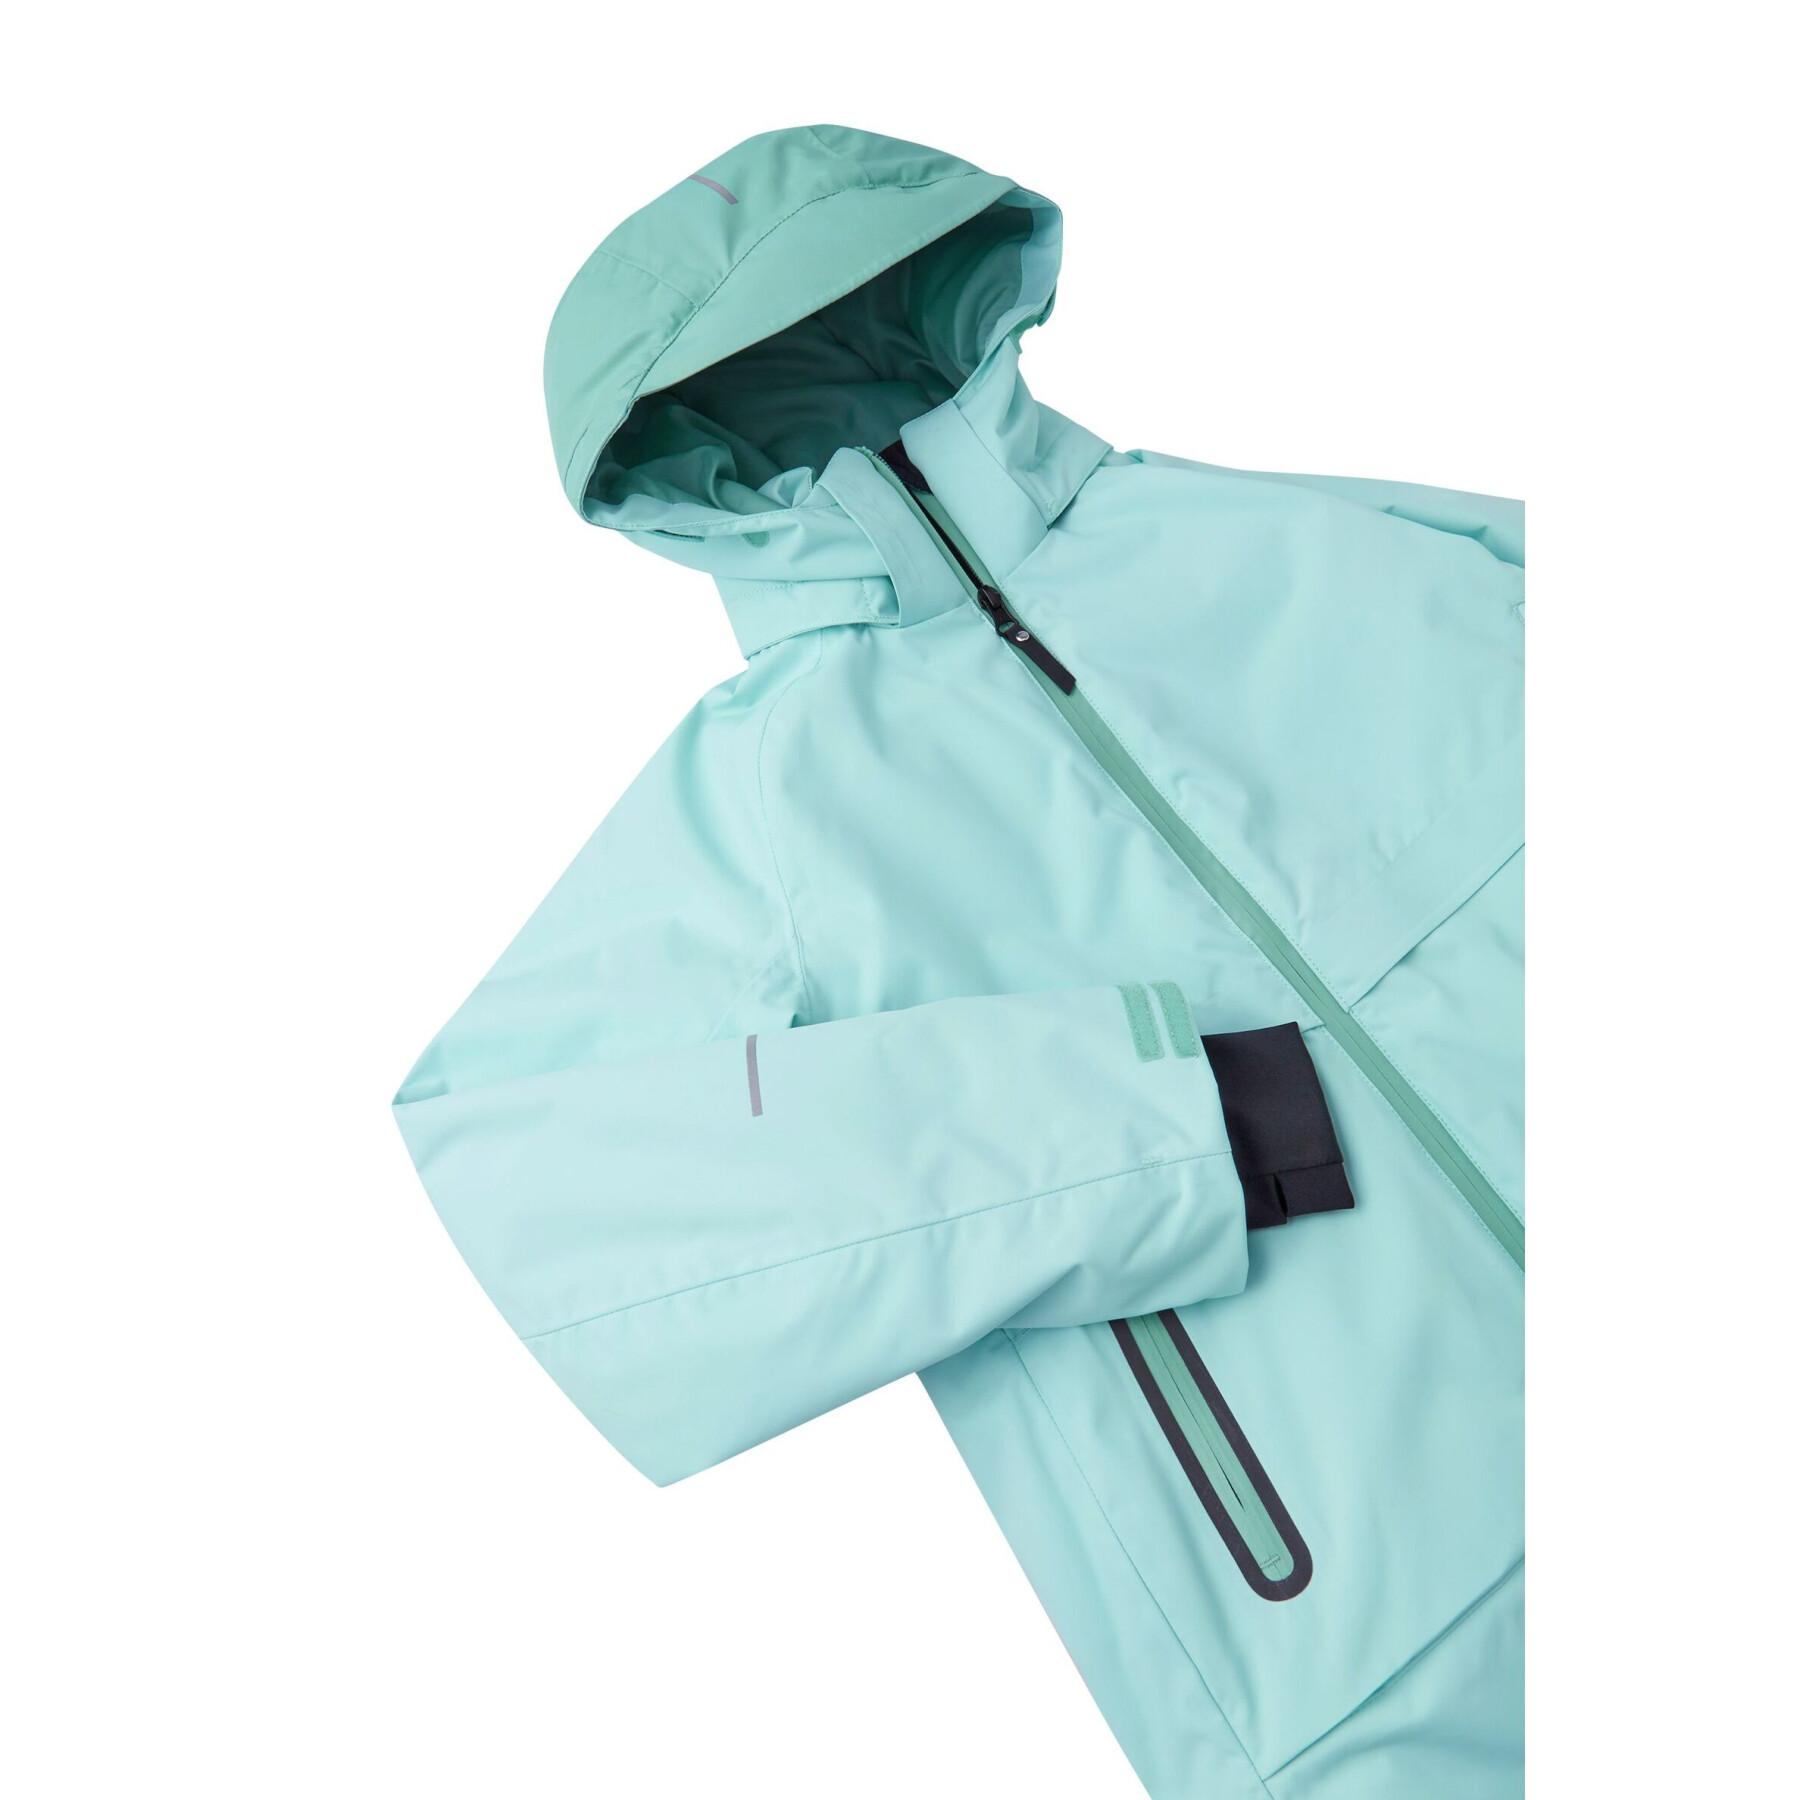 Waterproof jacket for children Reima Reima tec Posio